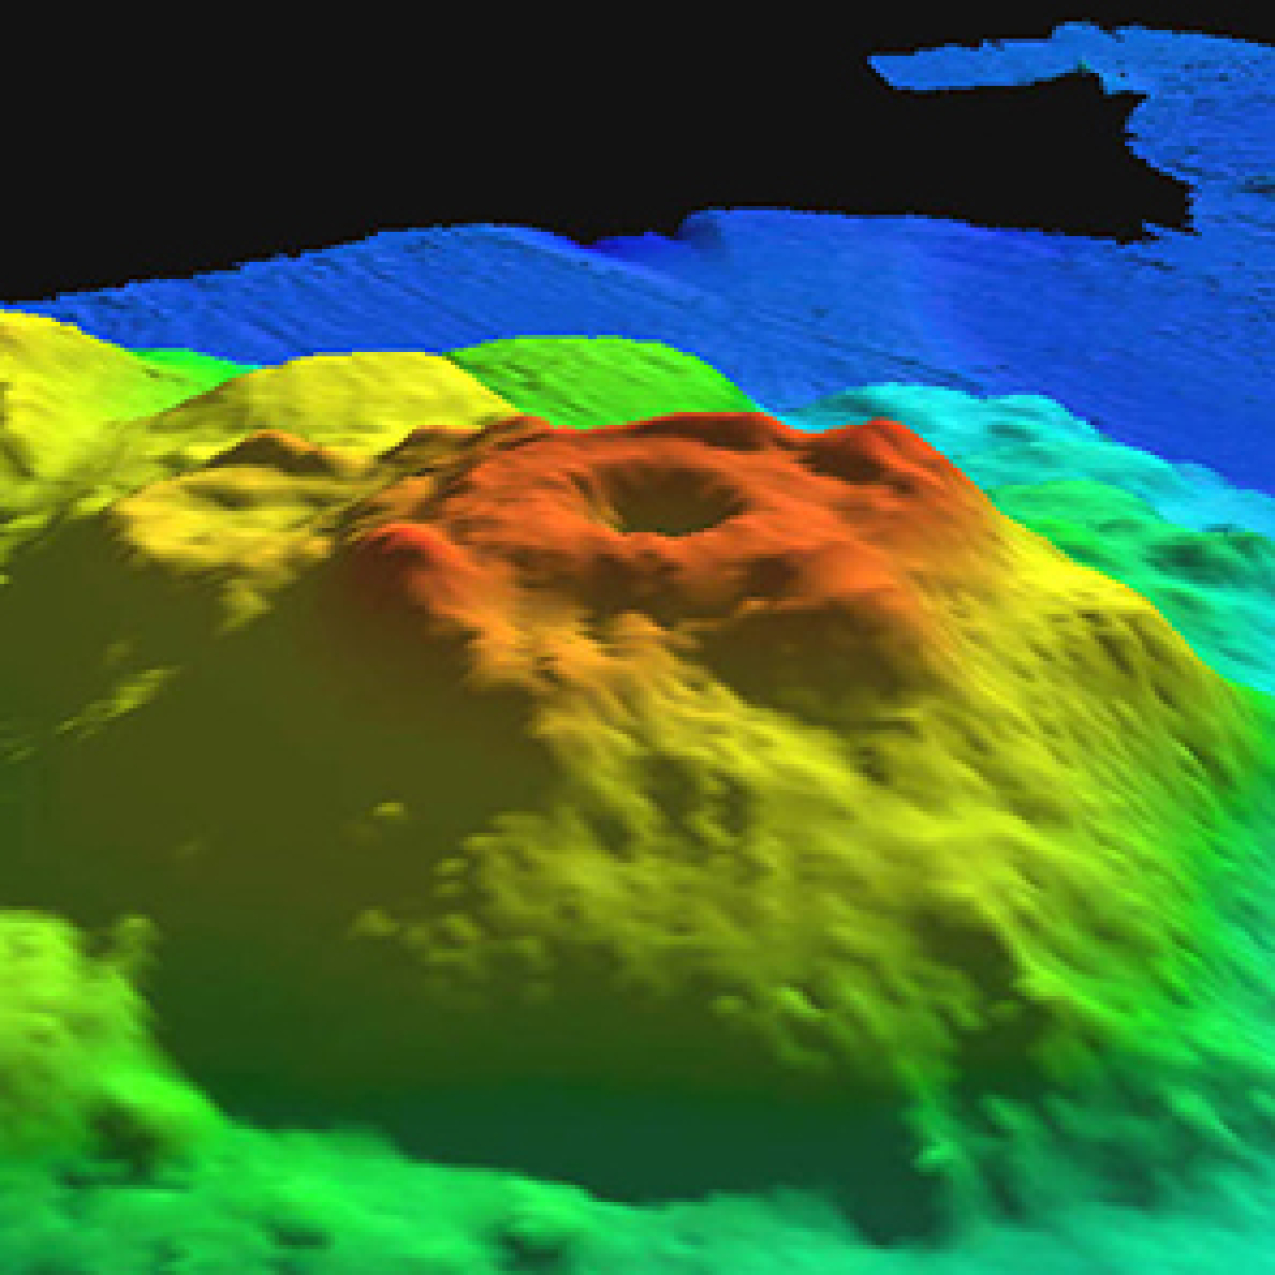 Modeled image of a seamount 